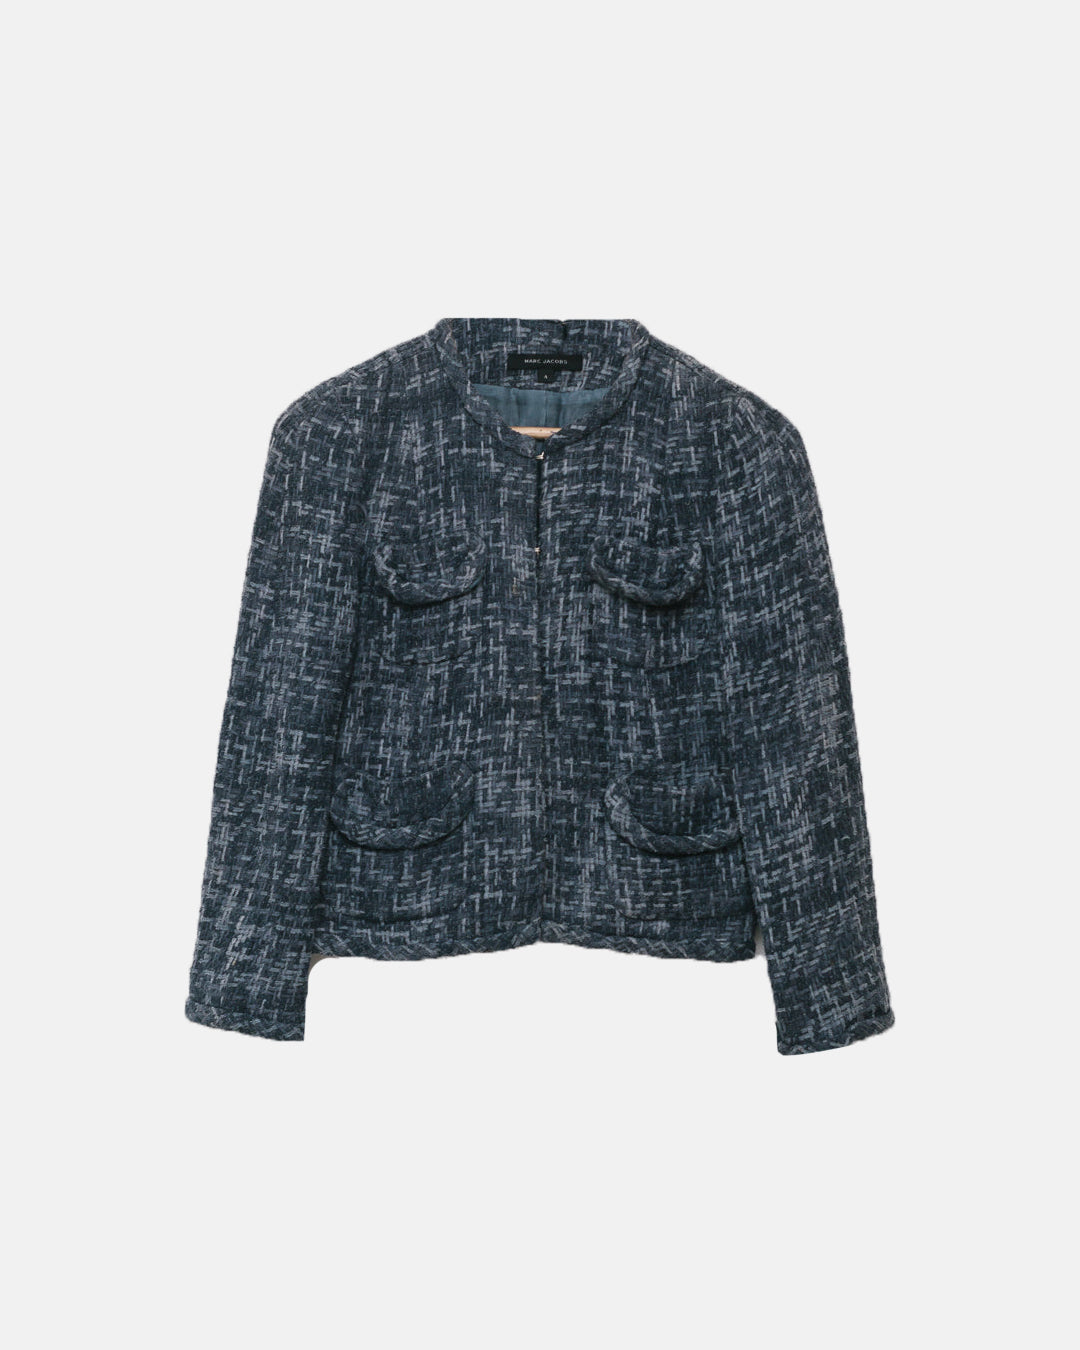 Marc Jacobs Cotton/Wool Short Jacket